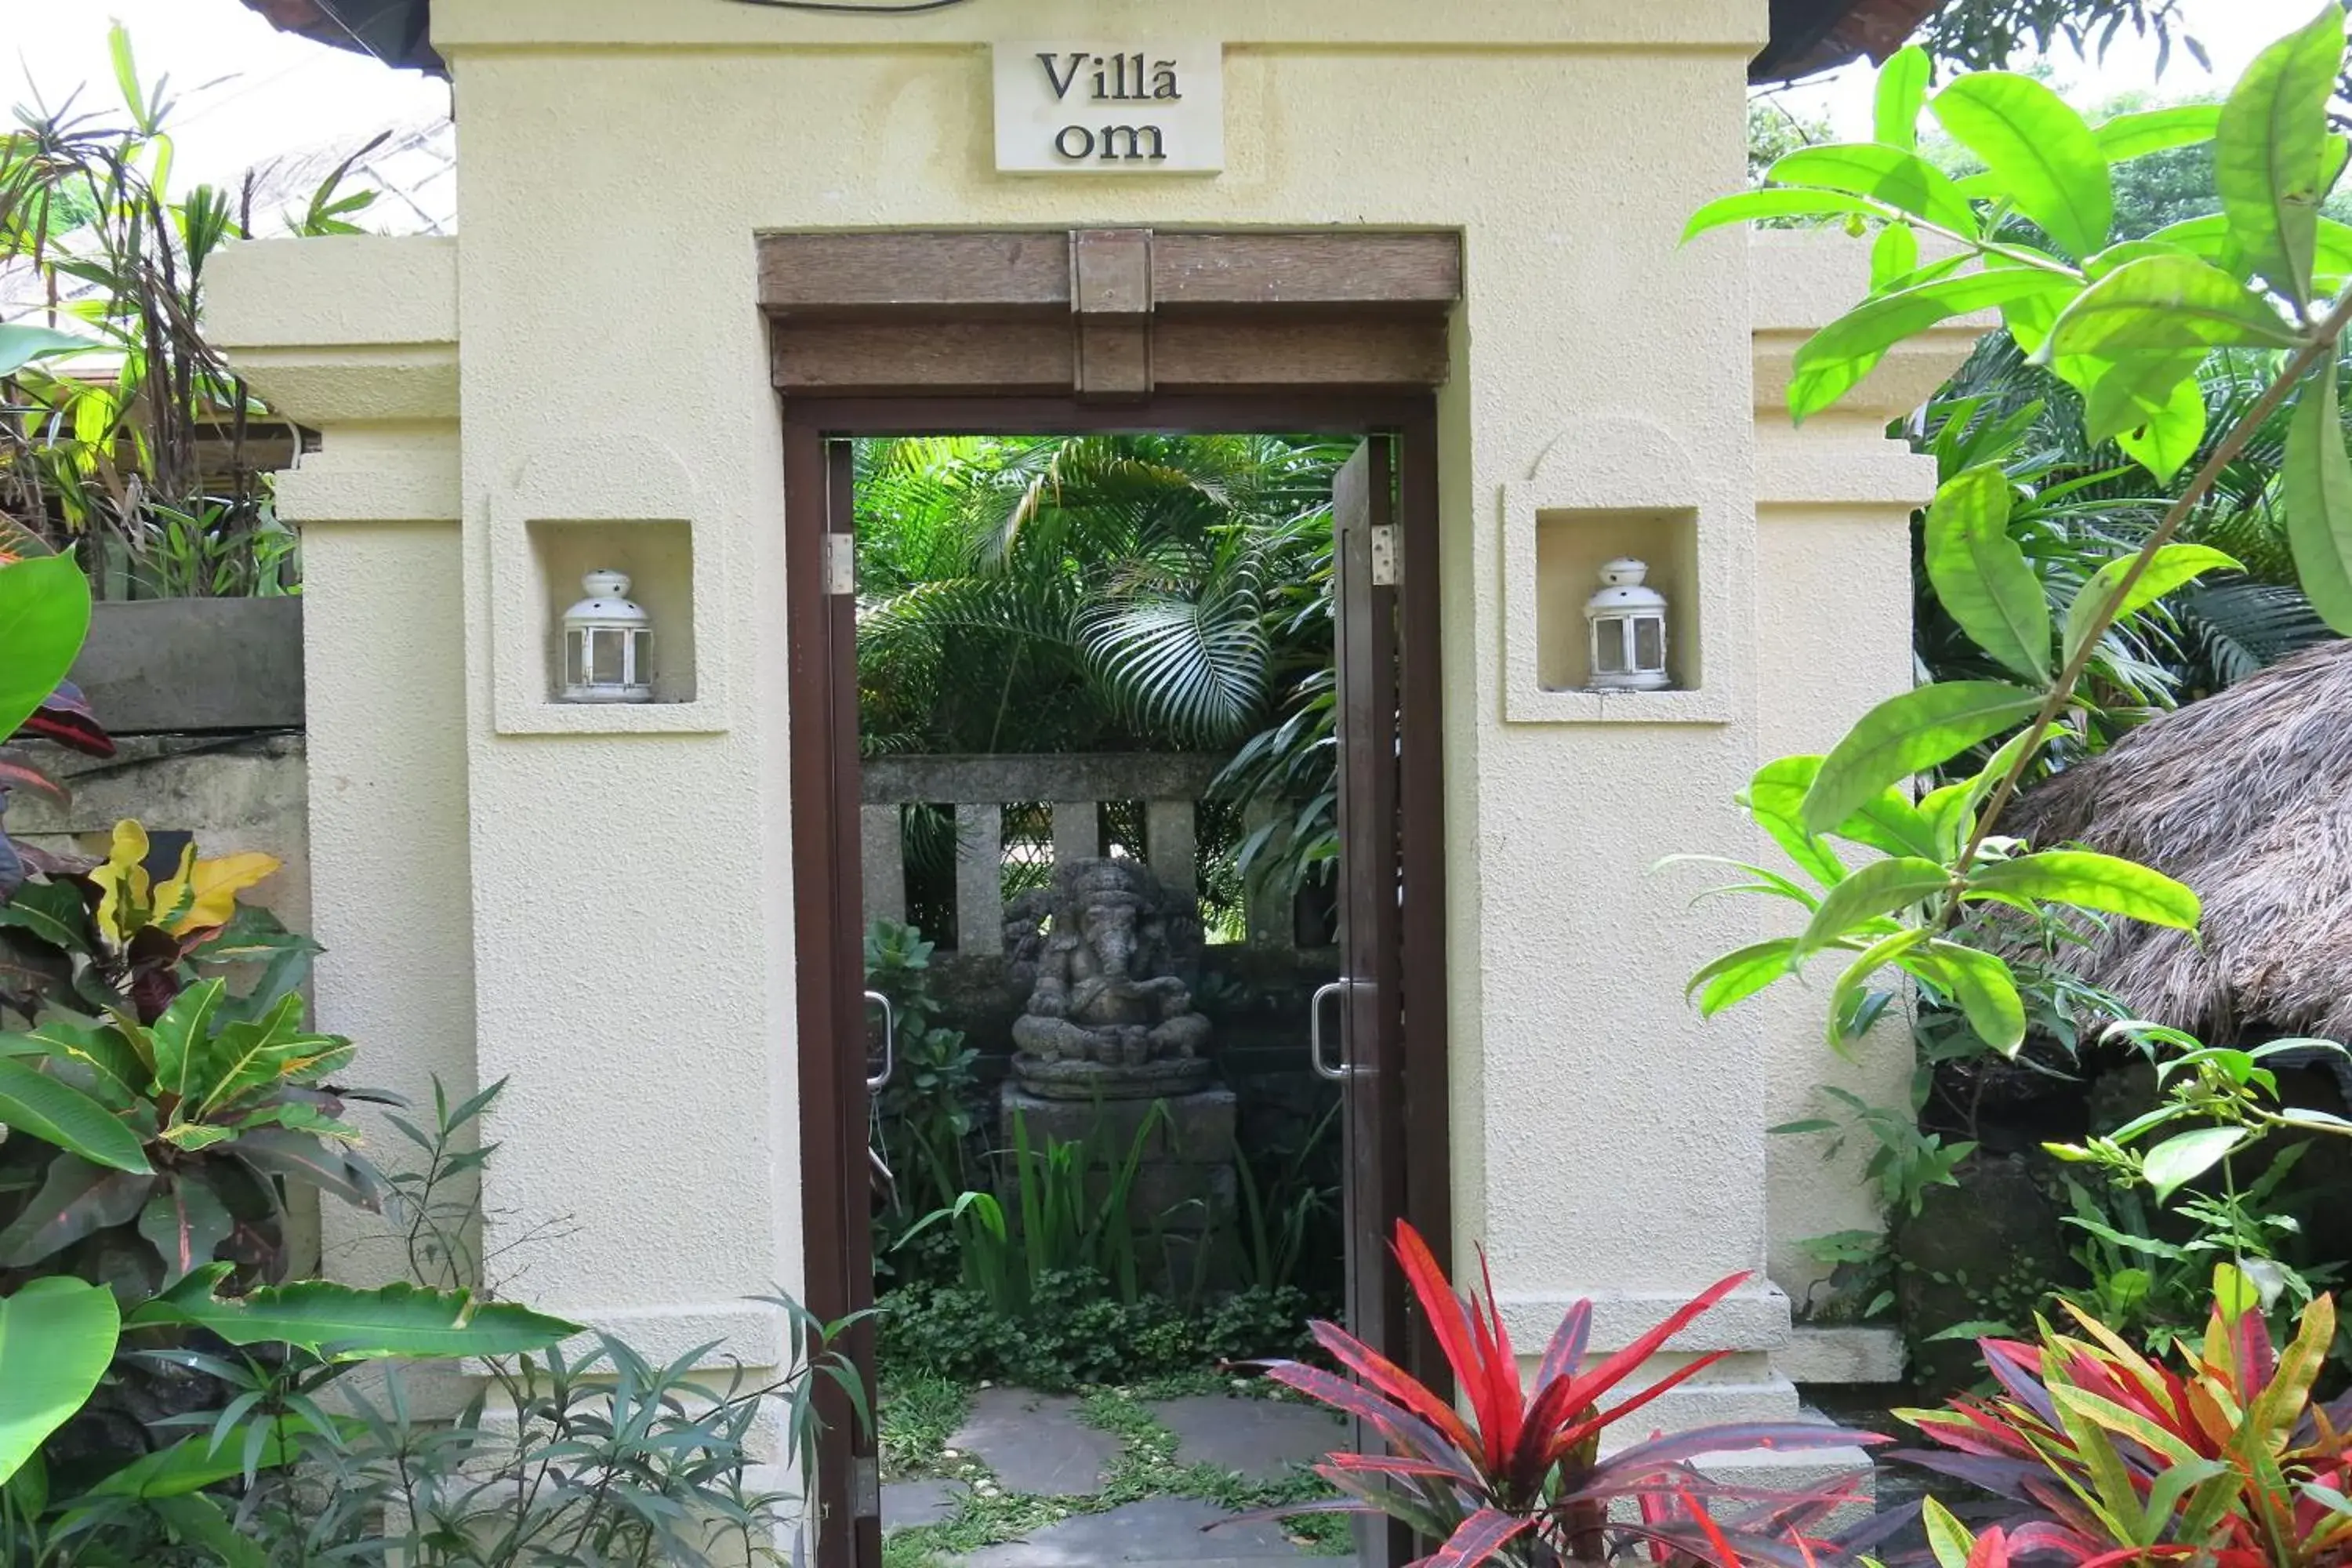 Area and facilities in Villa Nirvana